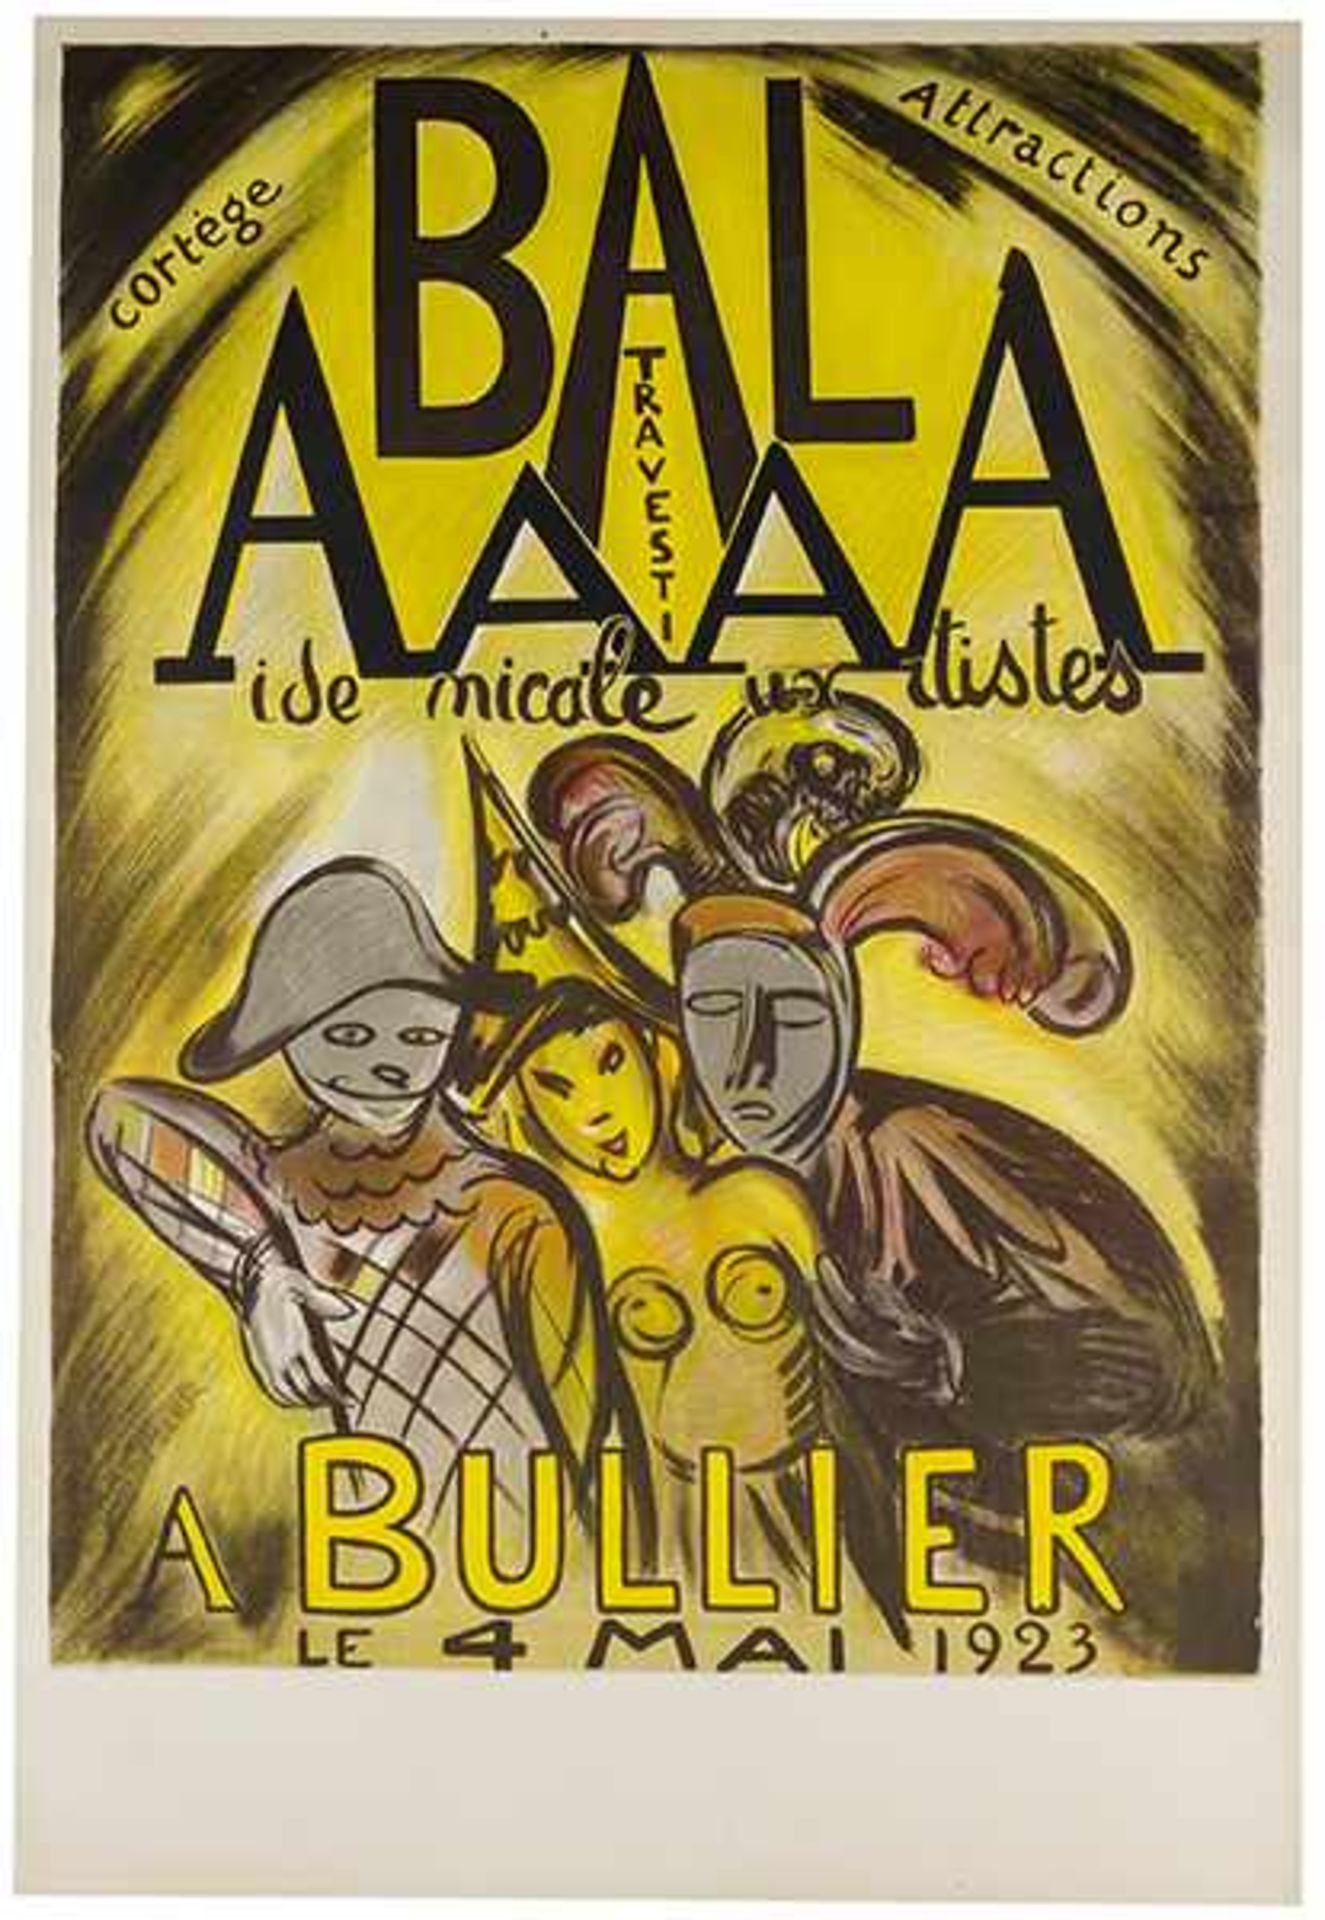 Plakate - - Friesz, Othon. Bal Travesti Aide Amicale aux Artistes a Bullier. Farbig lithographiertes